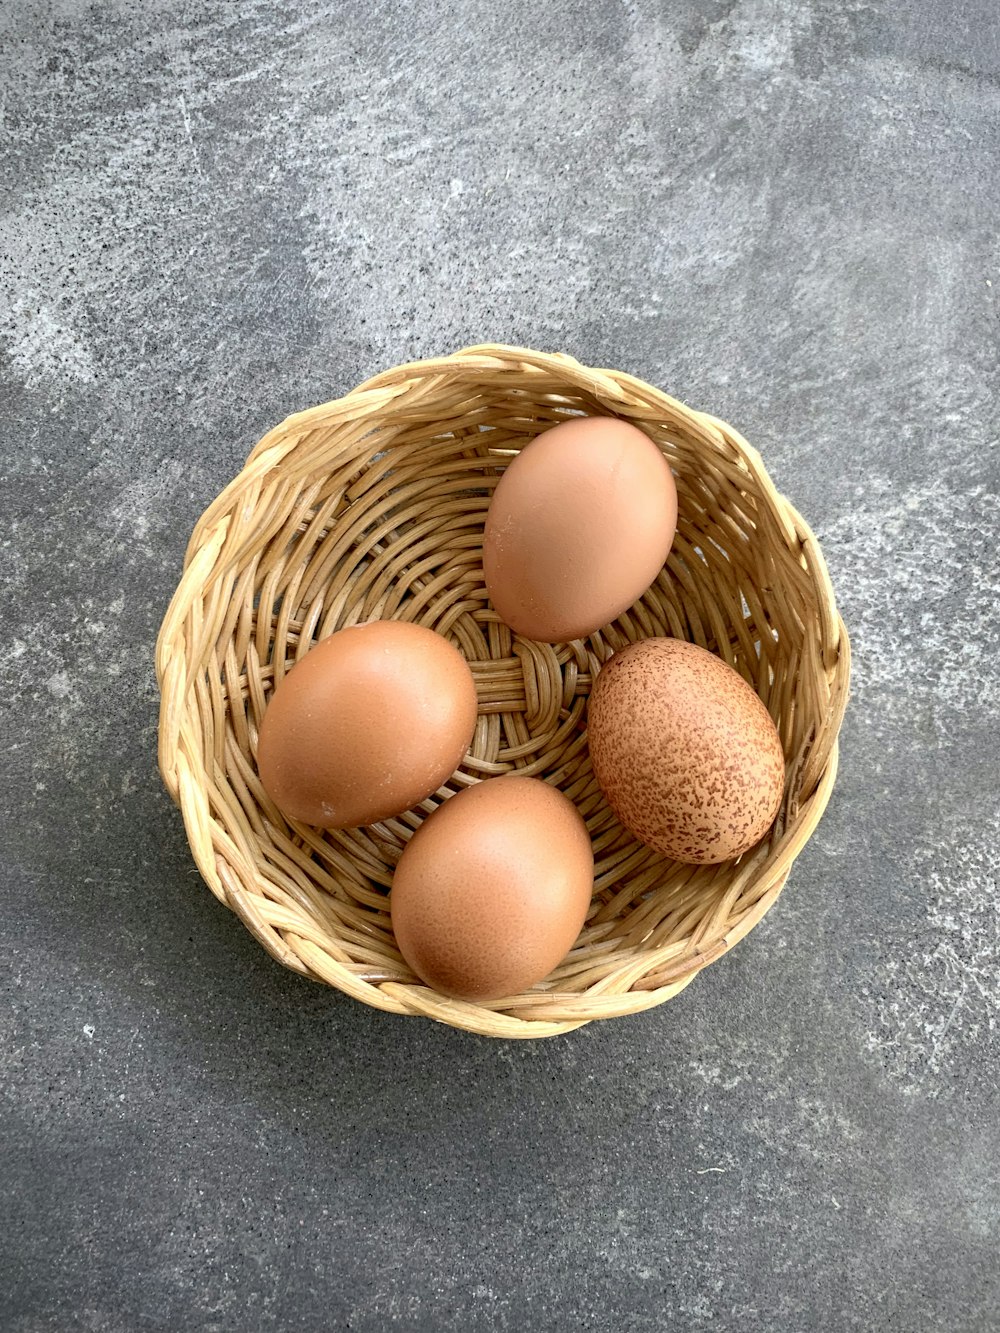 brown eggs in brown woven basket